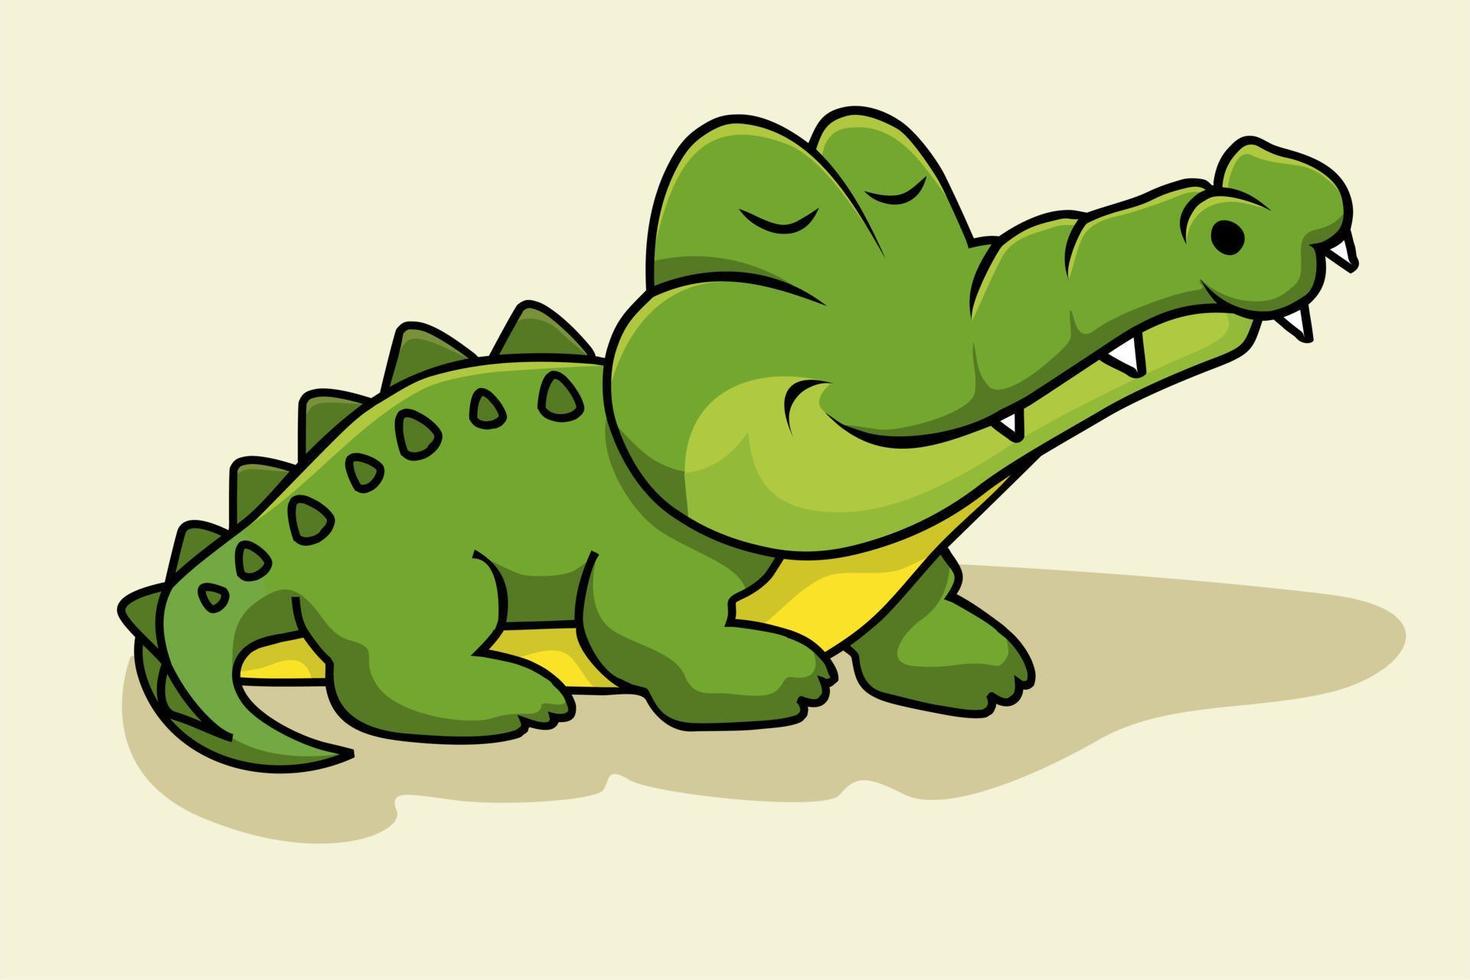 illustrations de dessins animés d'alligator de dessin animé de crocodile vecteur